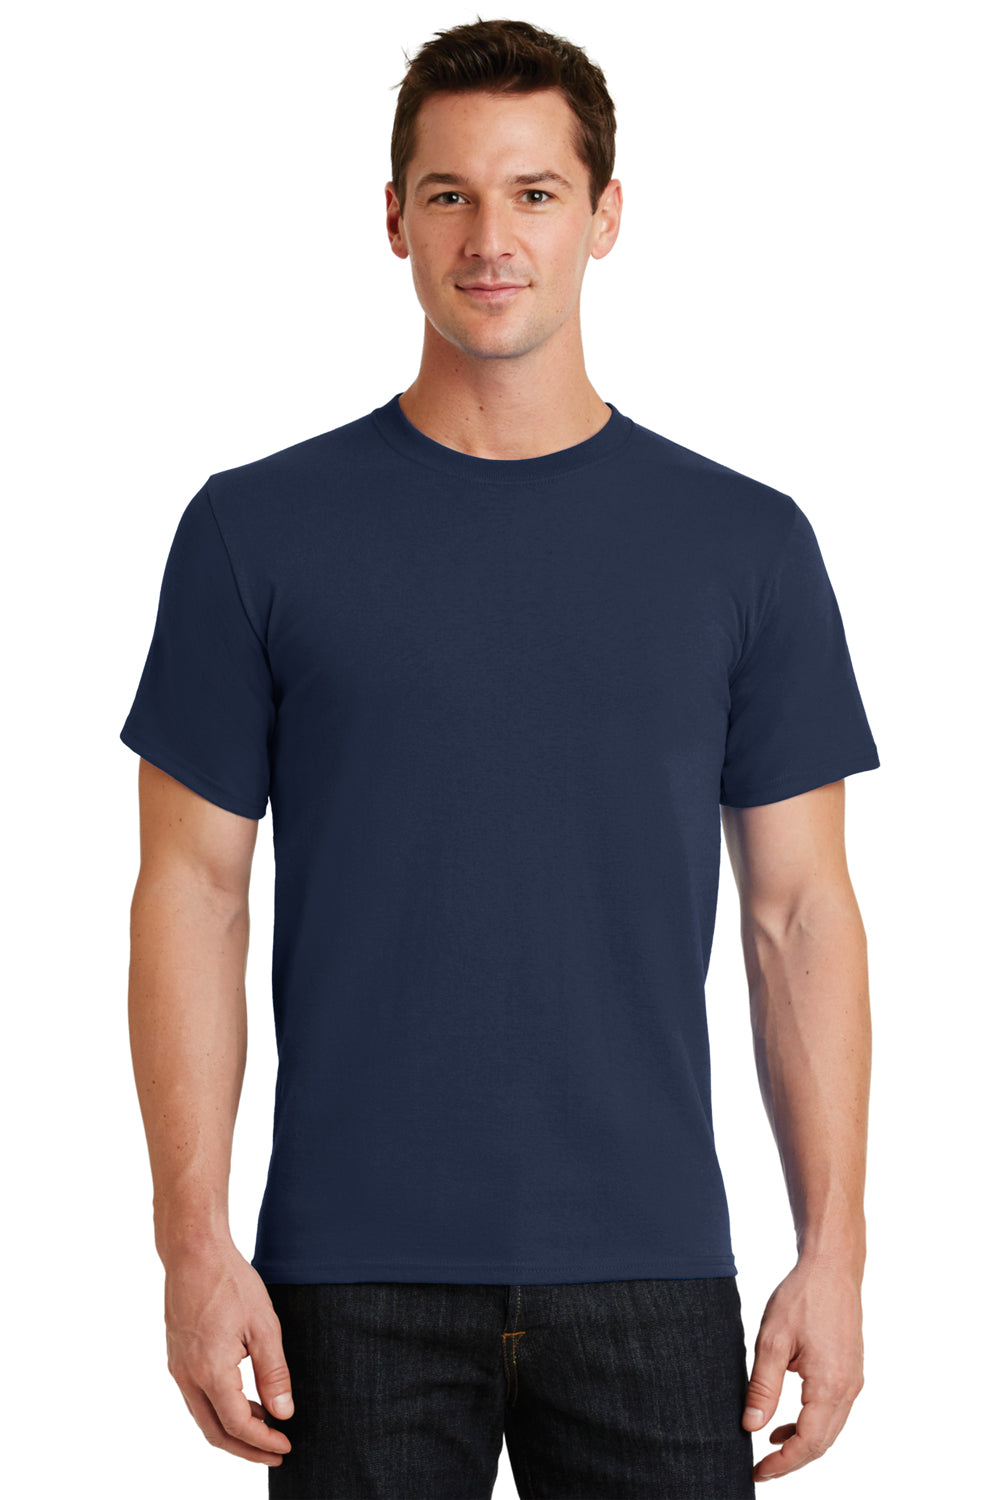 Port & Company PC61 Mens Essential Short Sleeve Crewneck T-Shirt Navy Blue Front